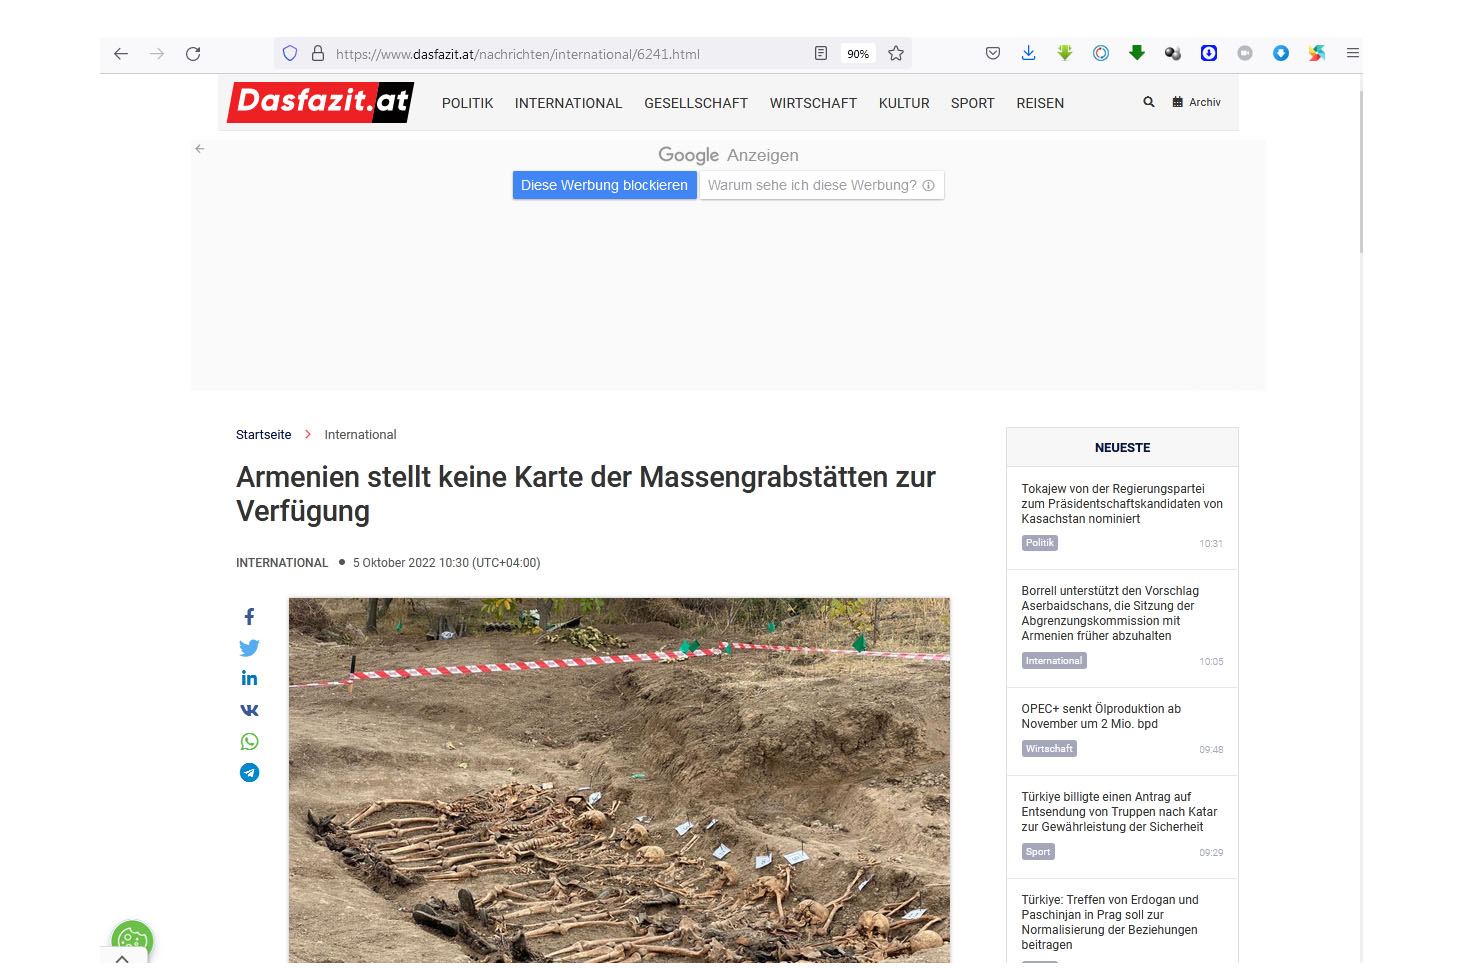 Austrian newspaper issues article on Armenian crimes - mass grave in Azerbaijan's Khojavand